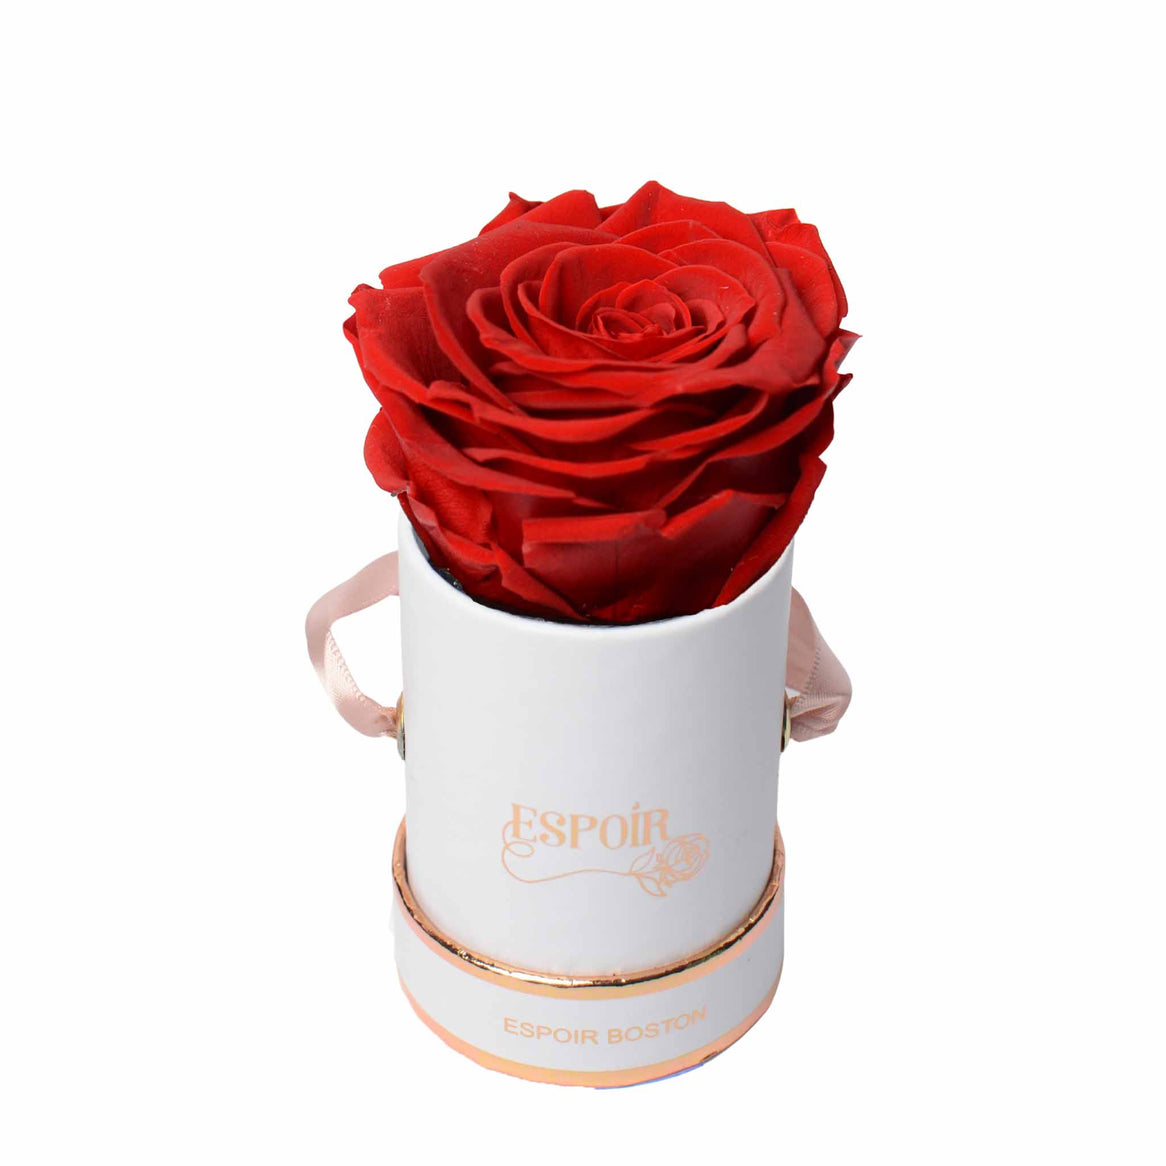 The Tea Cup Rose